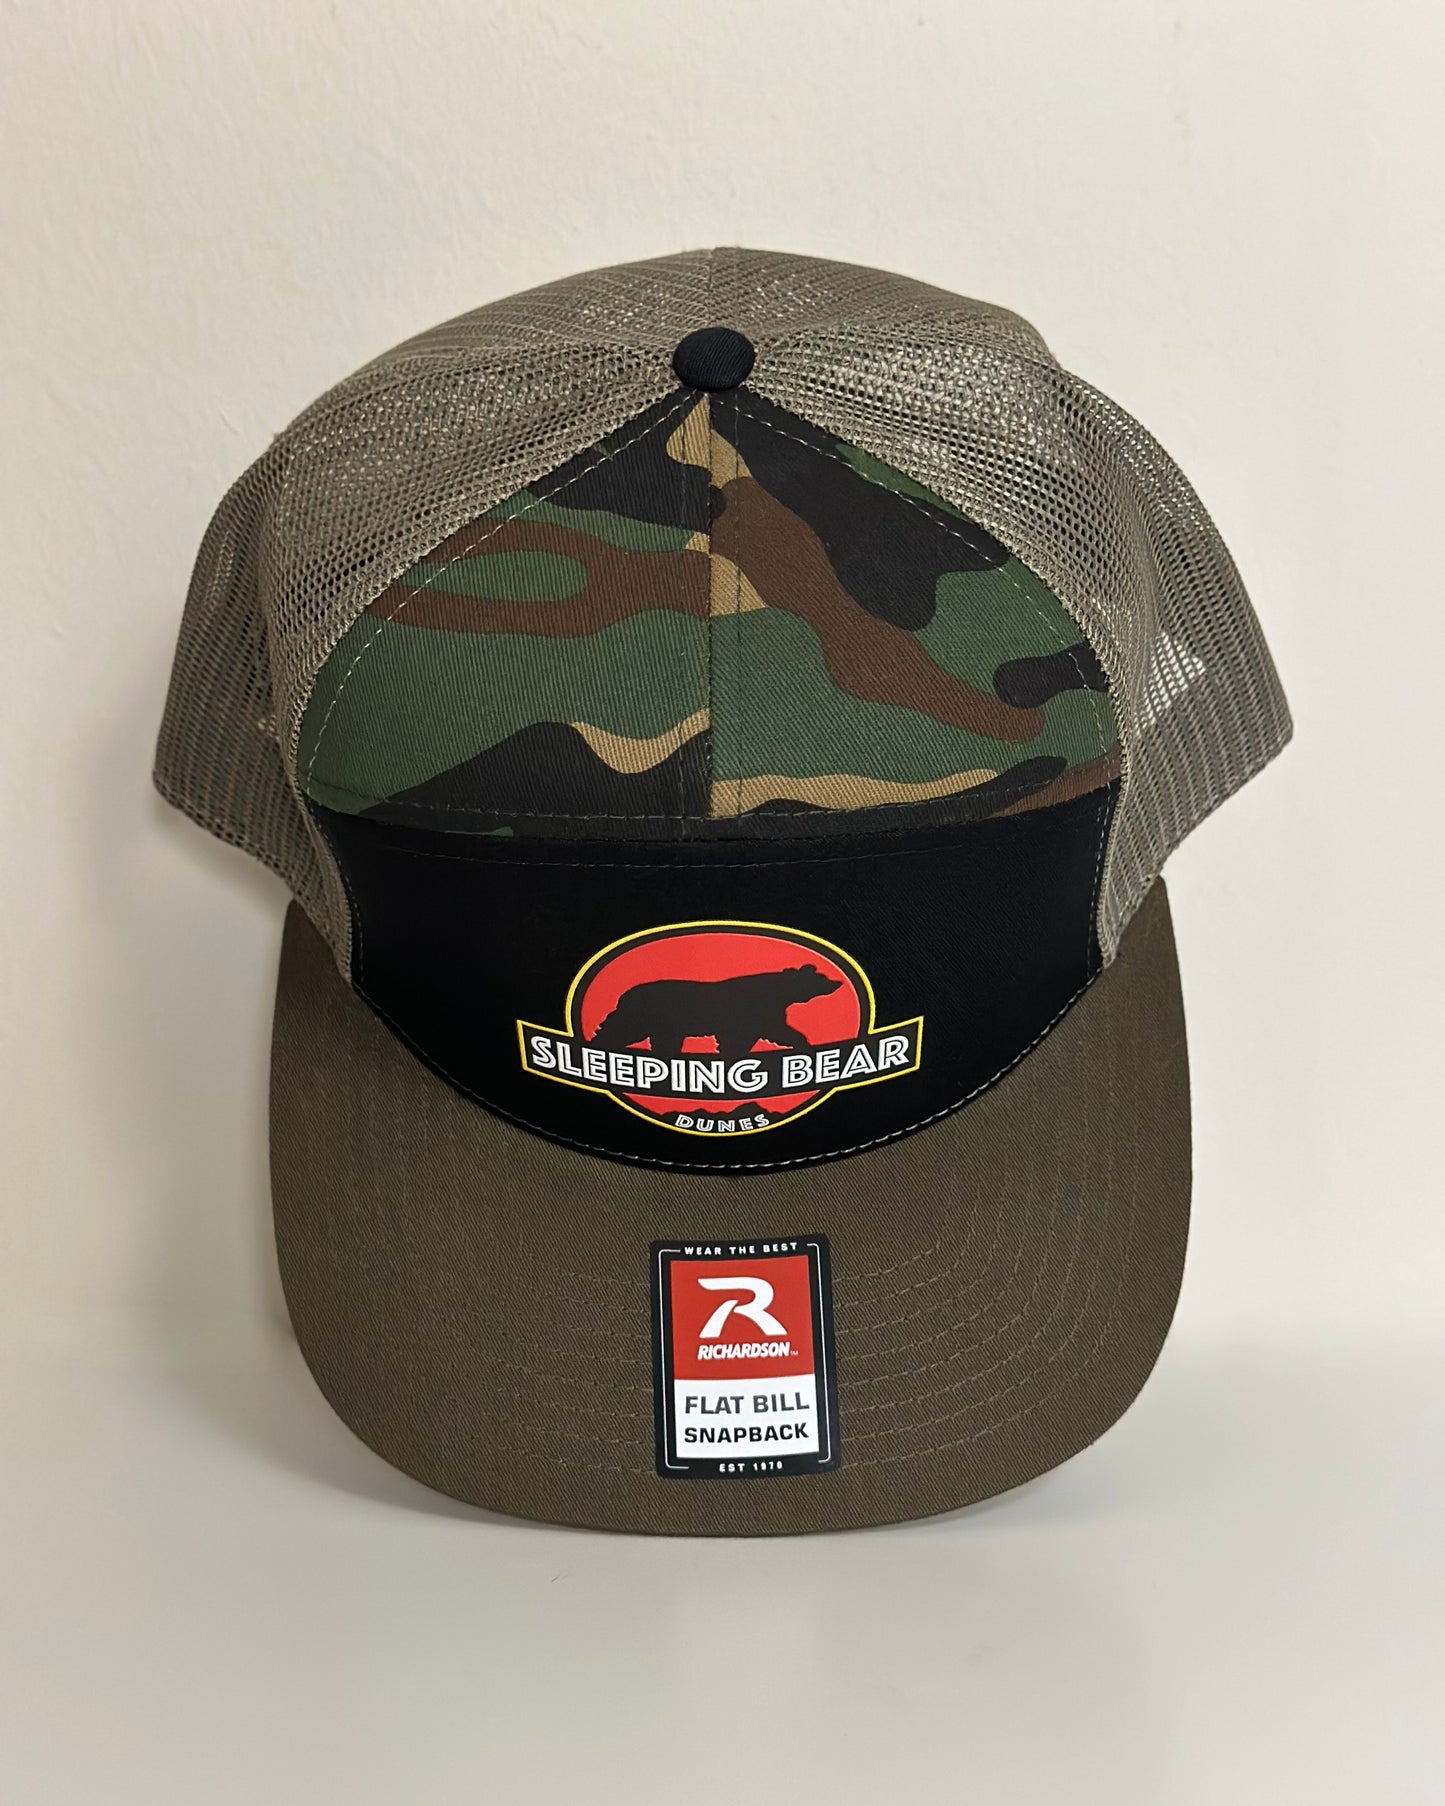 Sleeping Bear Dunes Trucker Hat